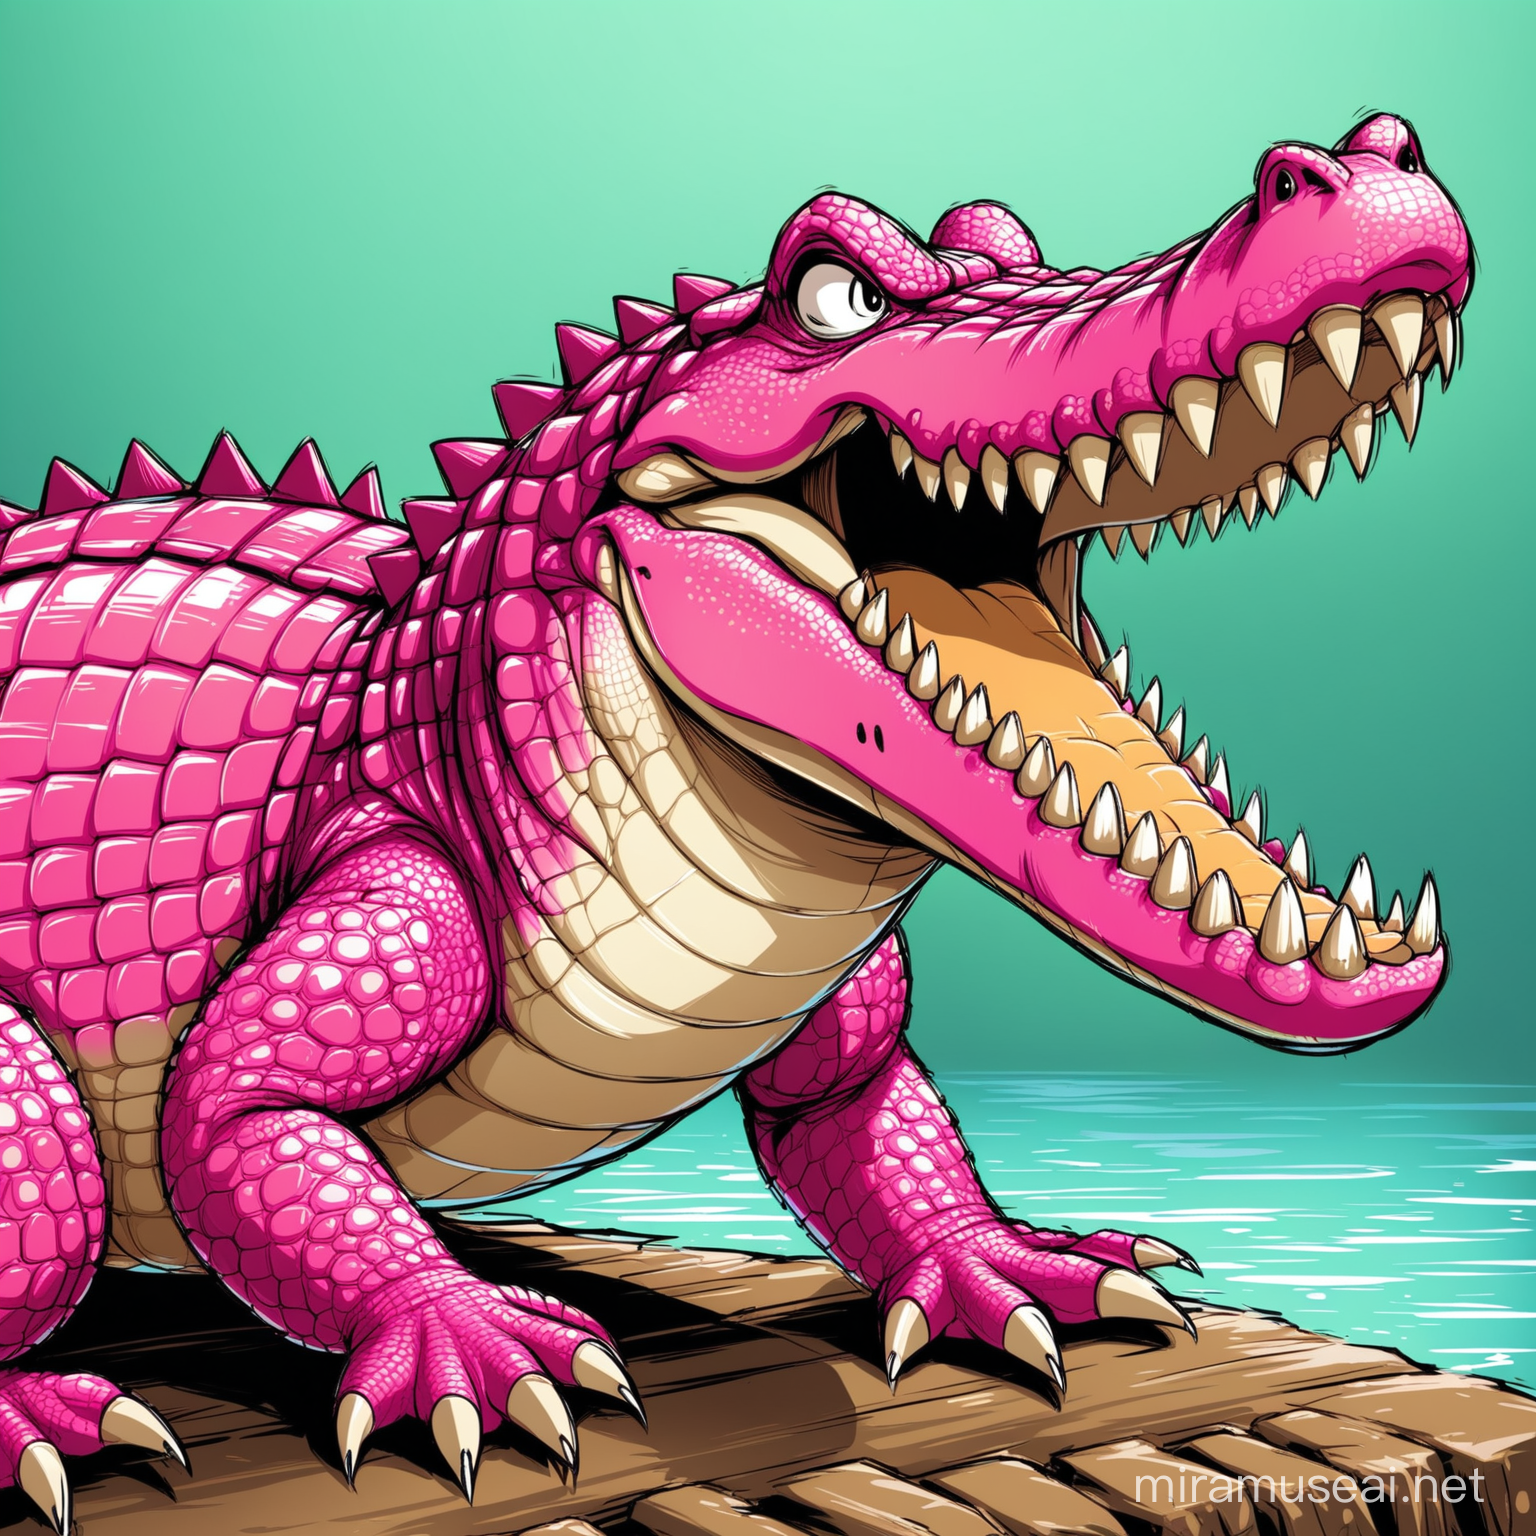 an angry pink crocodile